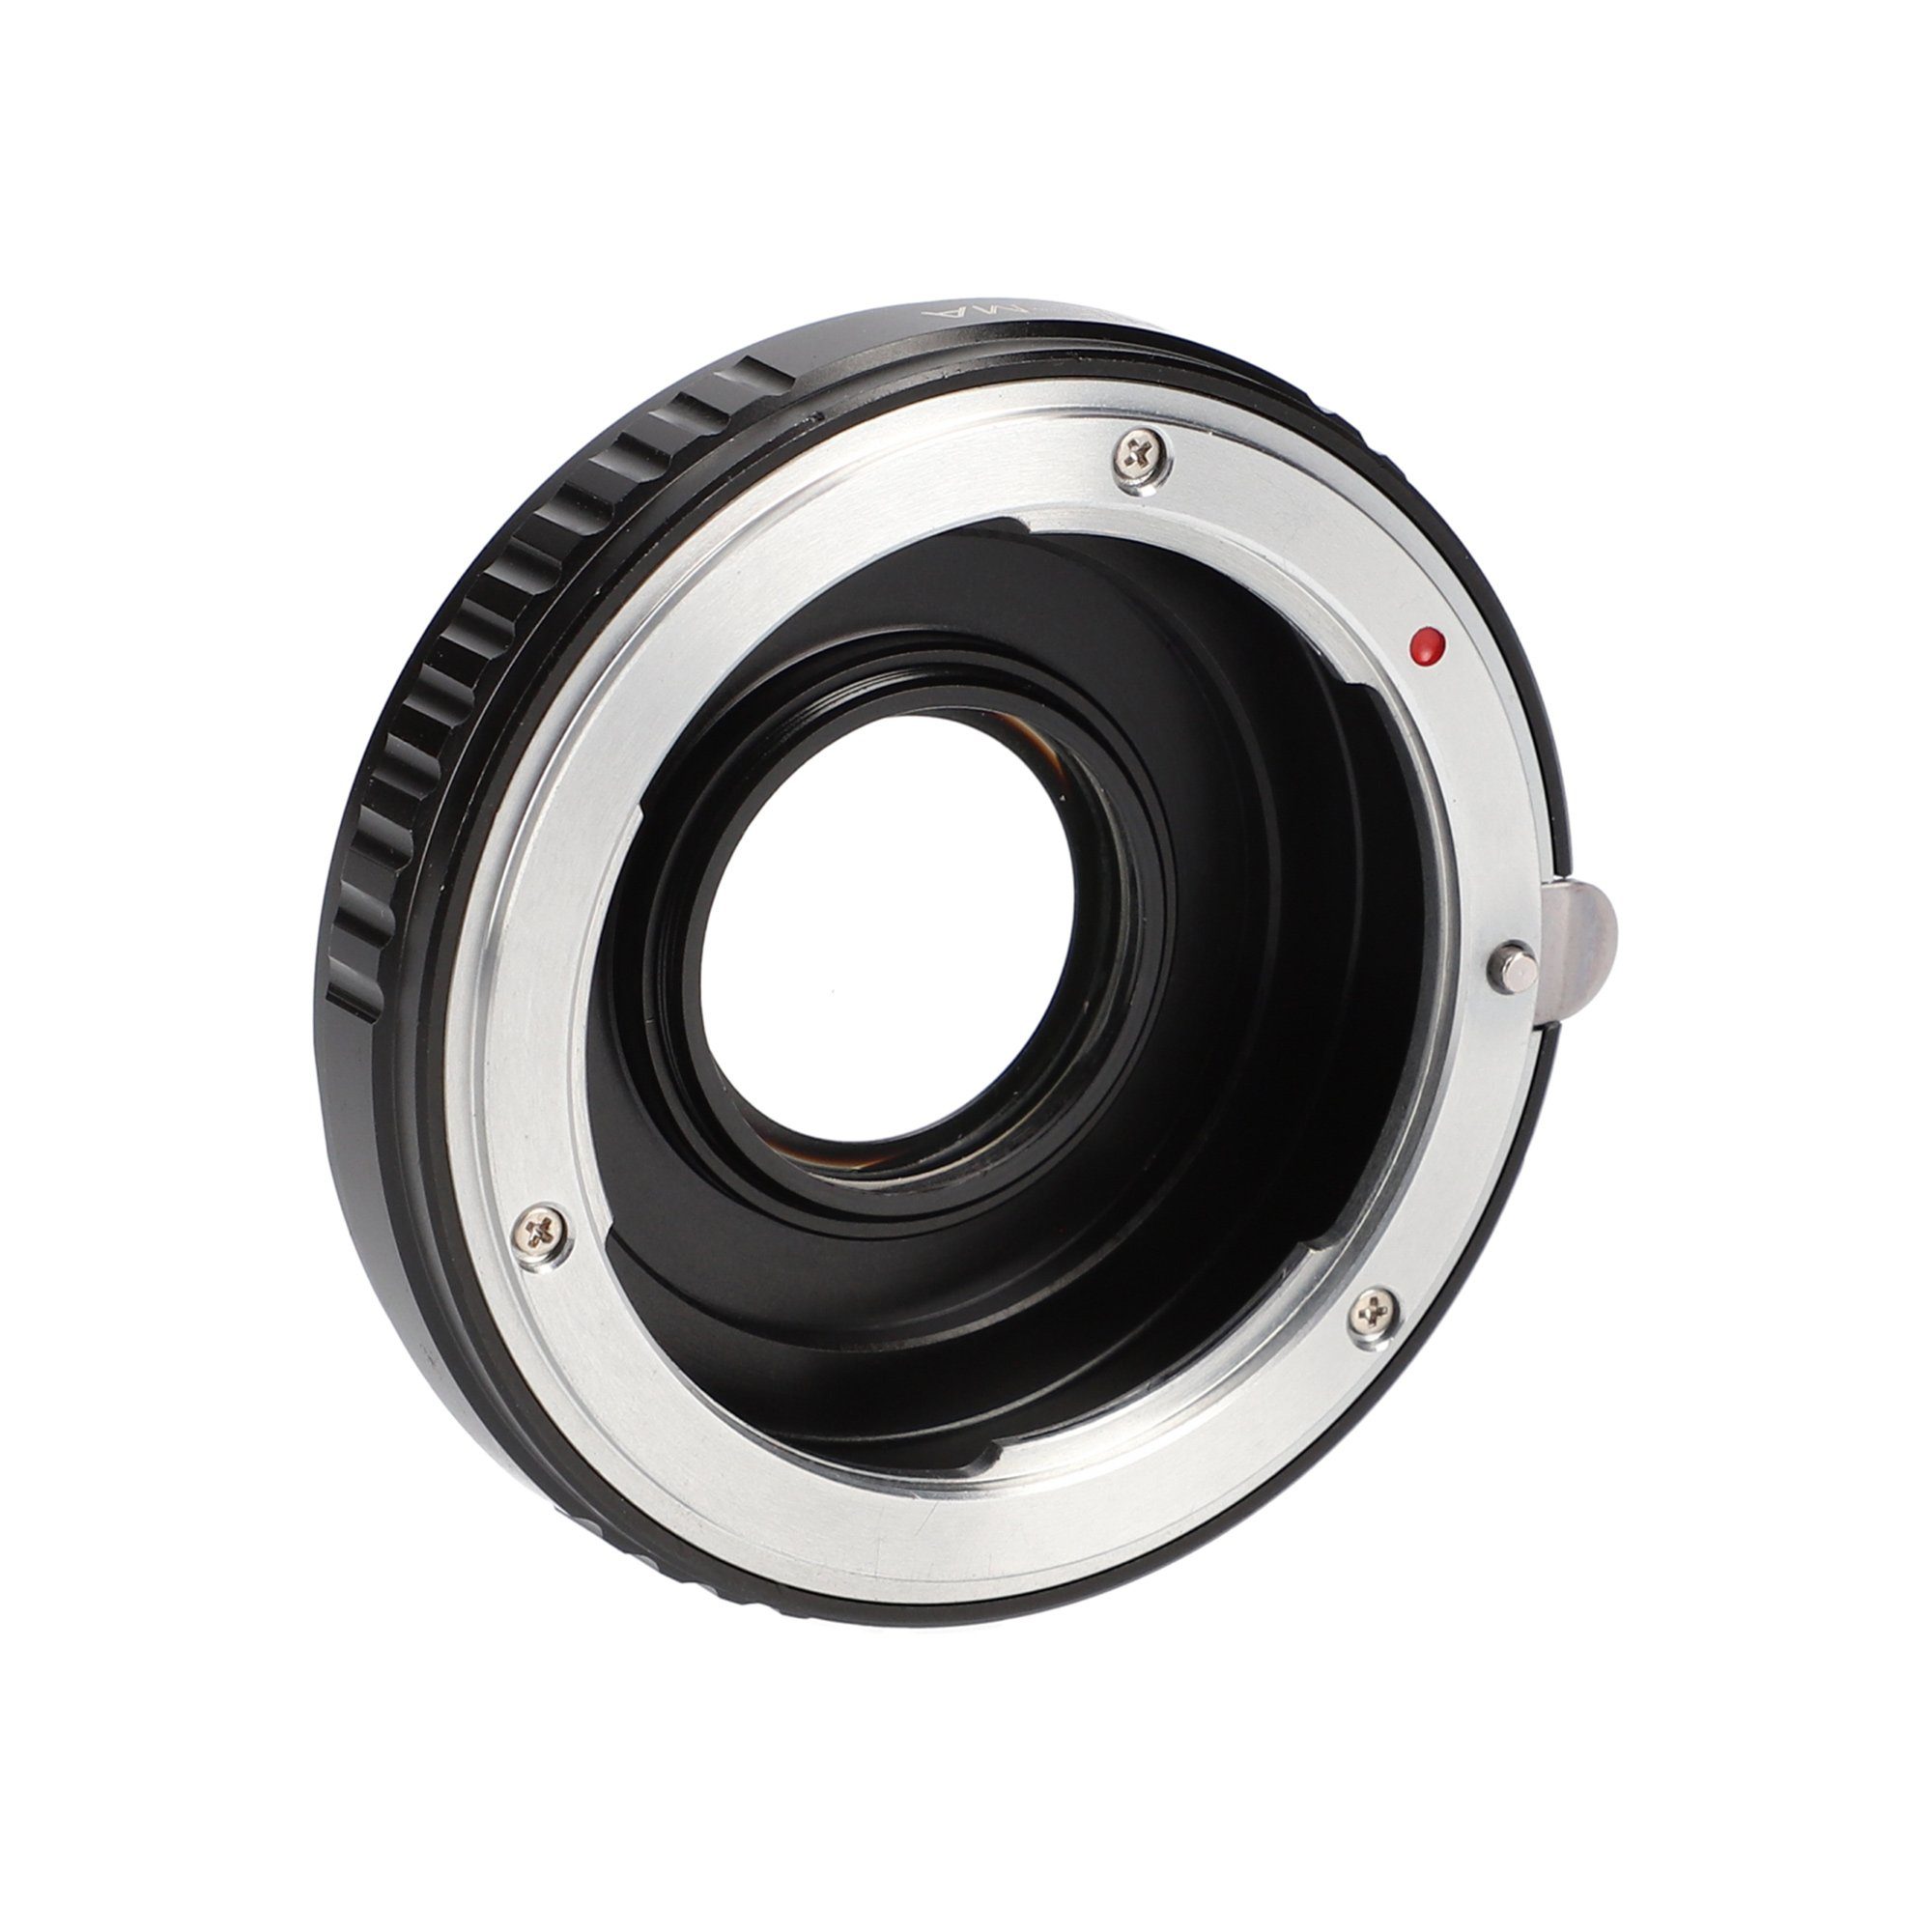 ayex Nikon F-Objektive - Sony Adapter Objektiveadapter Alpha Korrekturlinse 